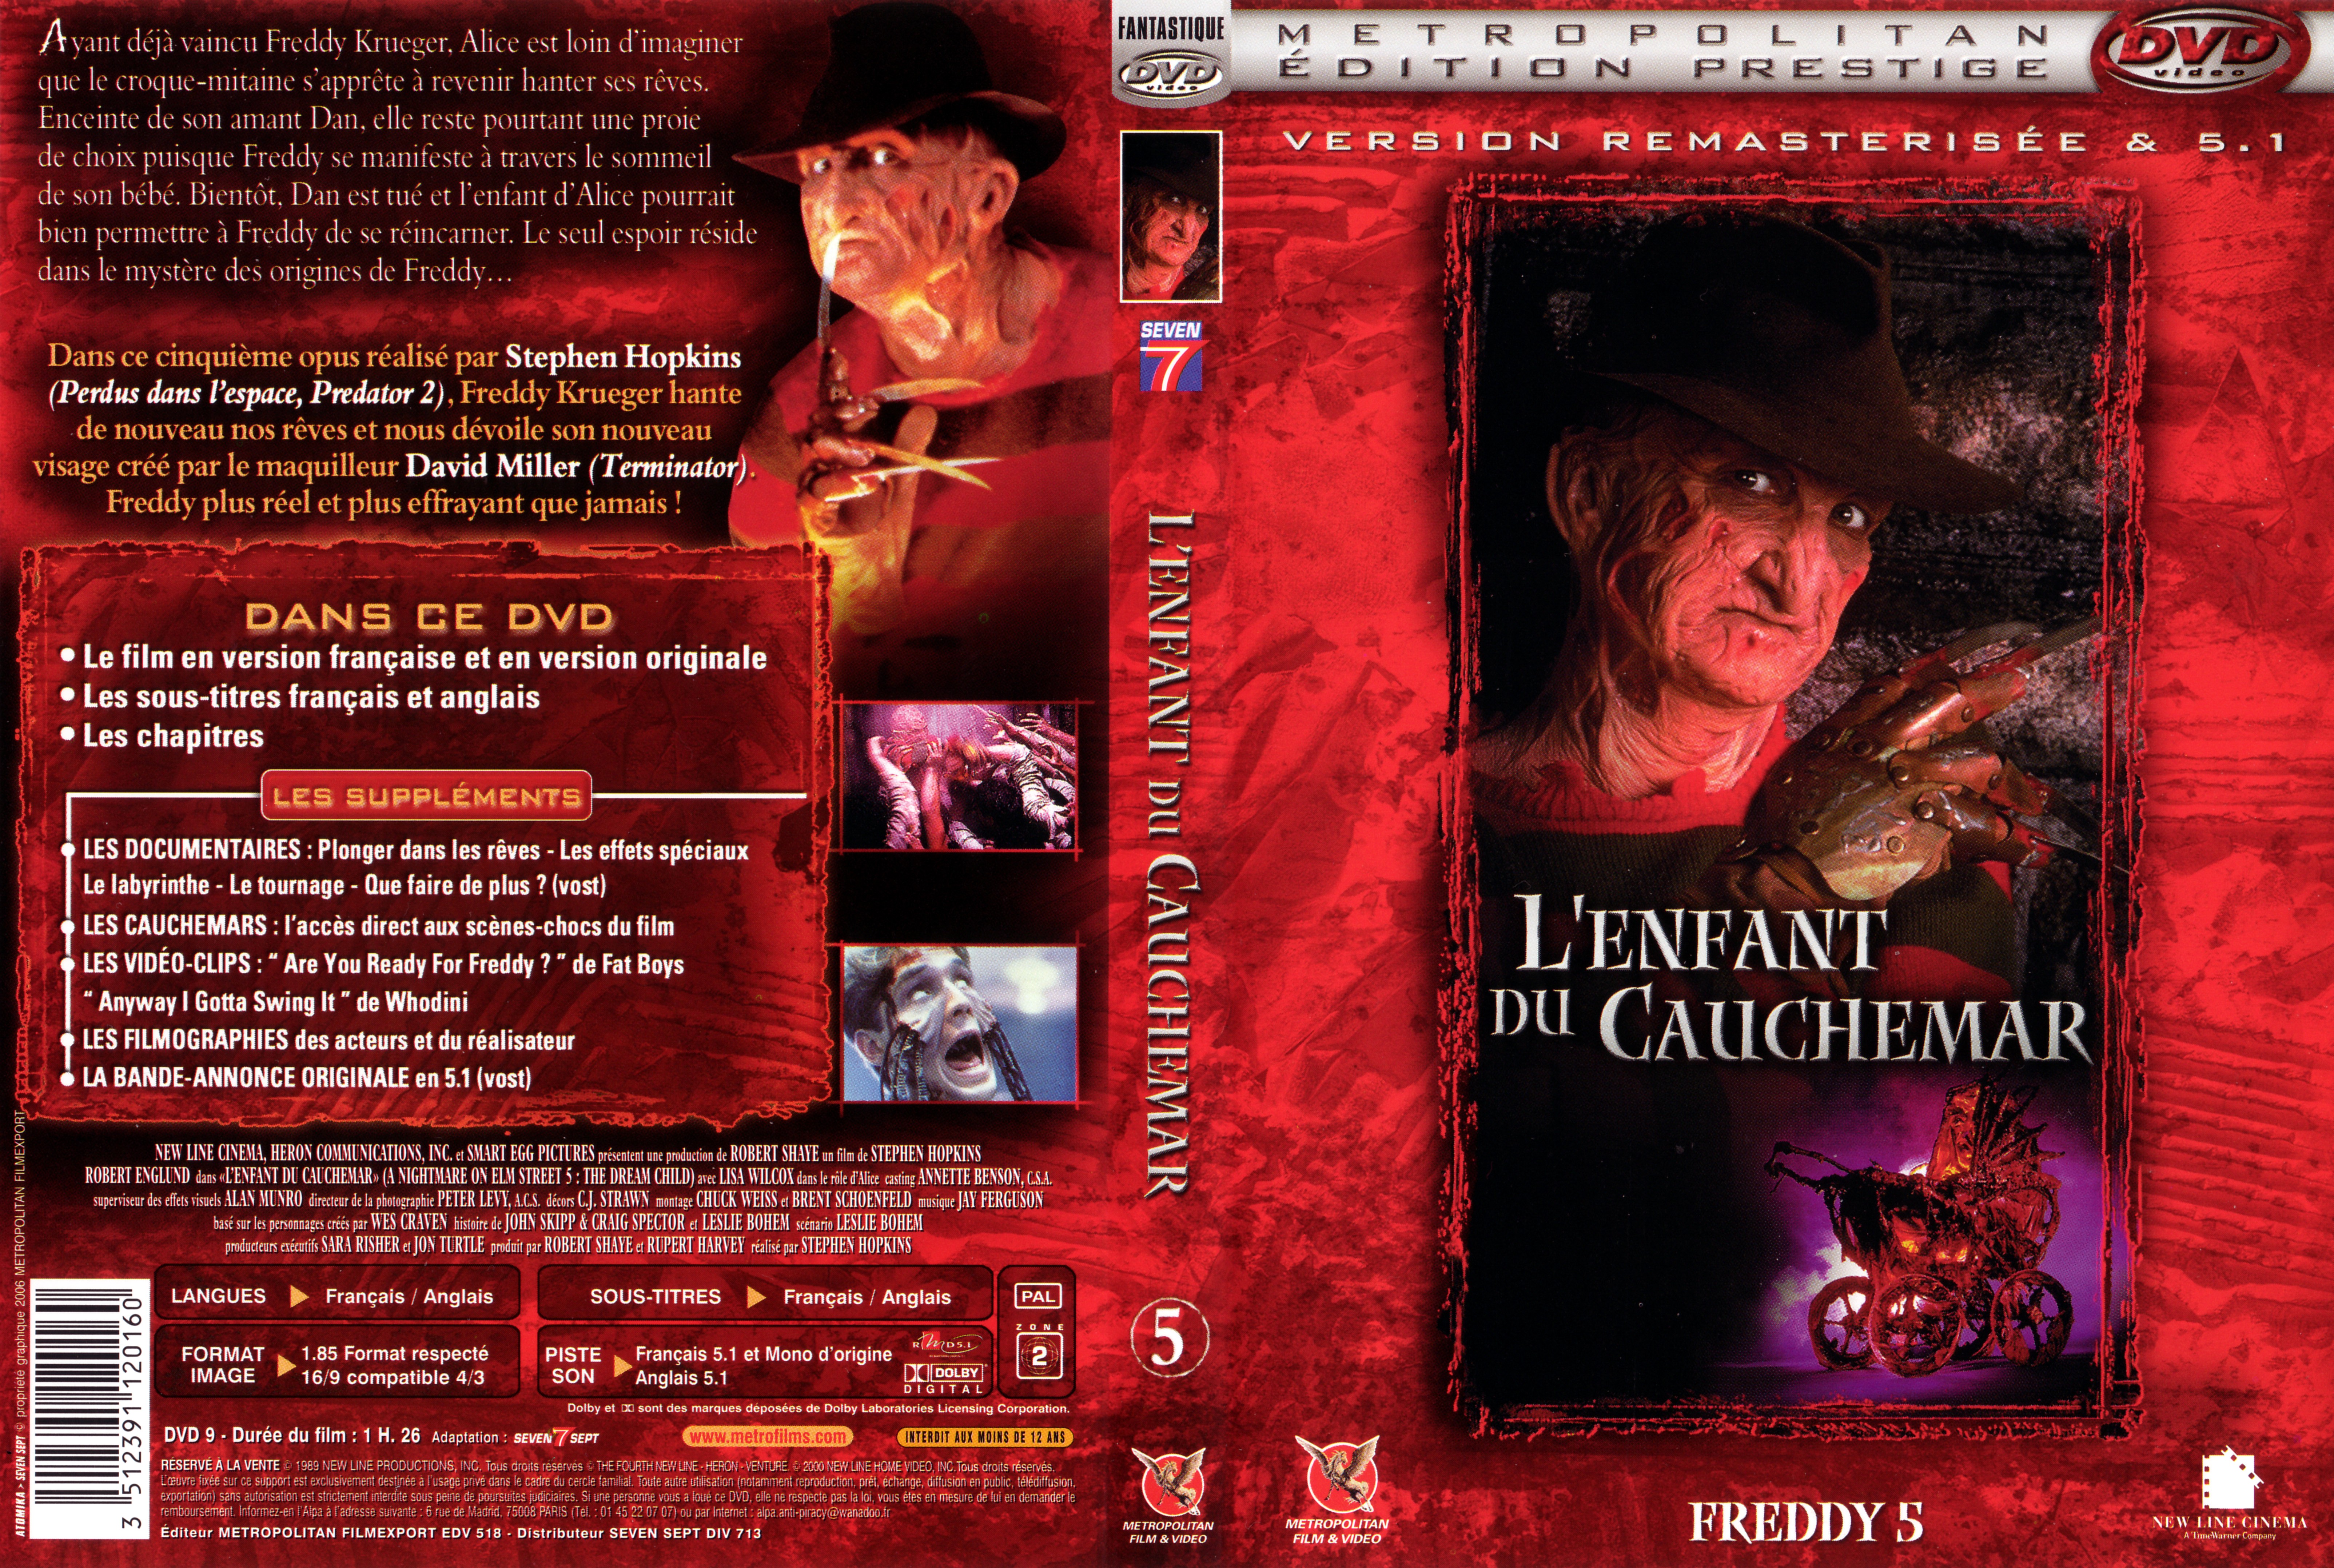 Jaquette DVD Freddy 5 L